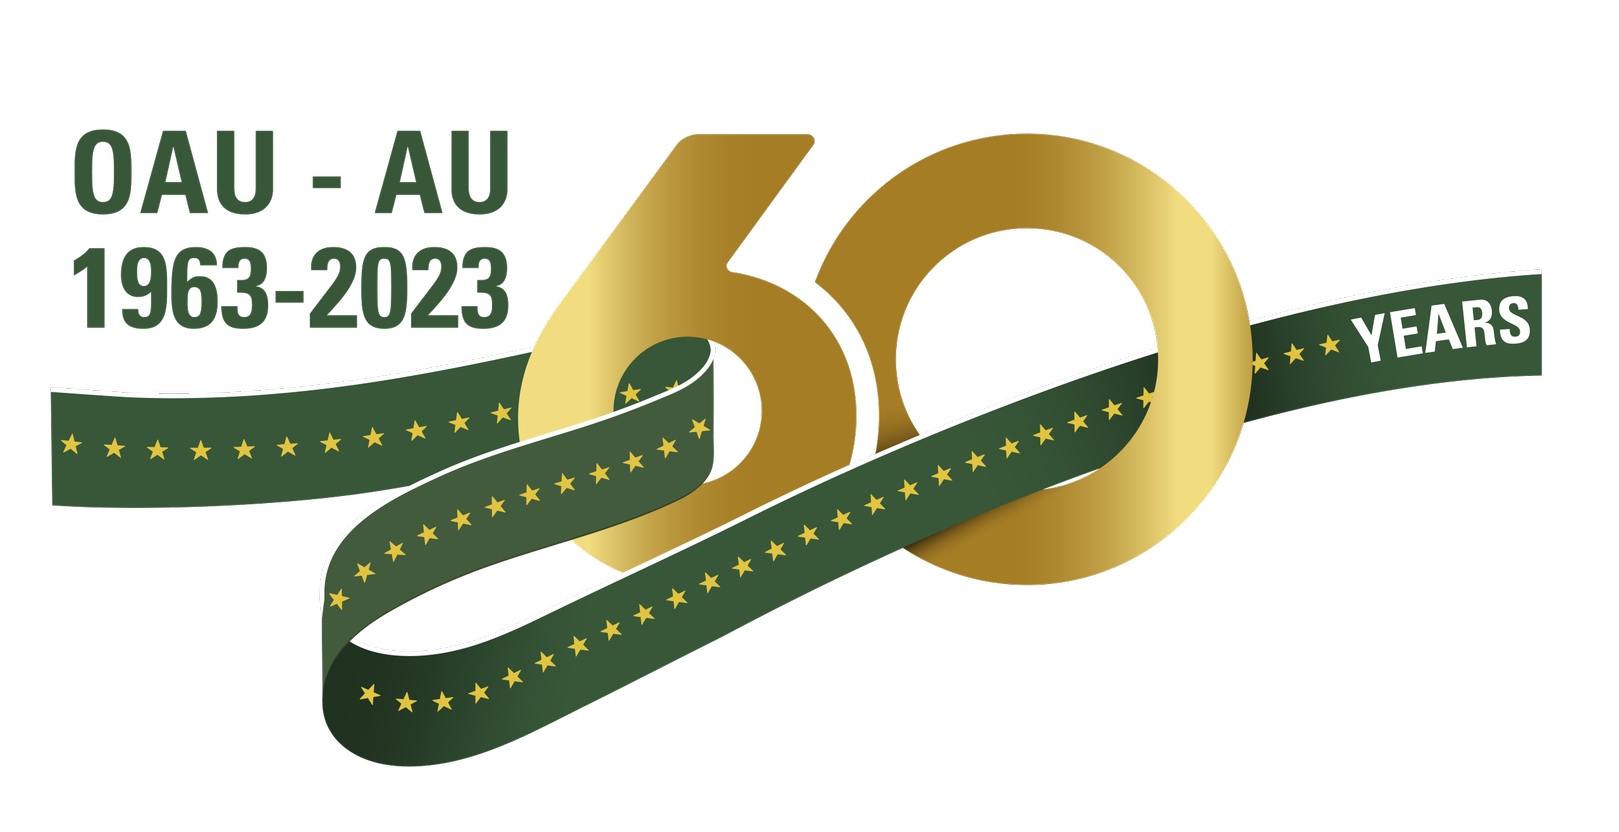 Africa celebrates the 60th anniversary of the OAU-AU